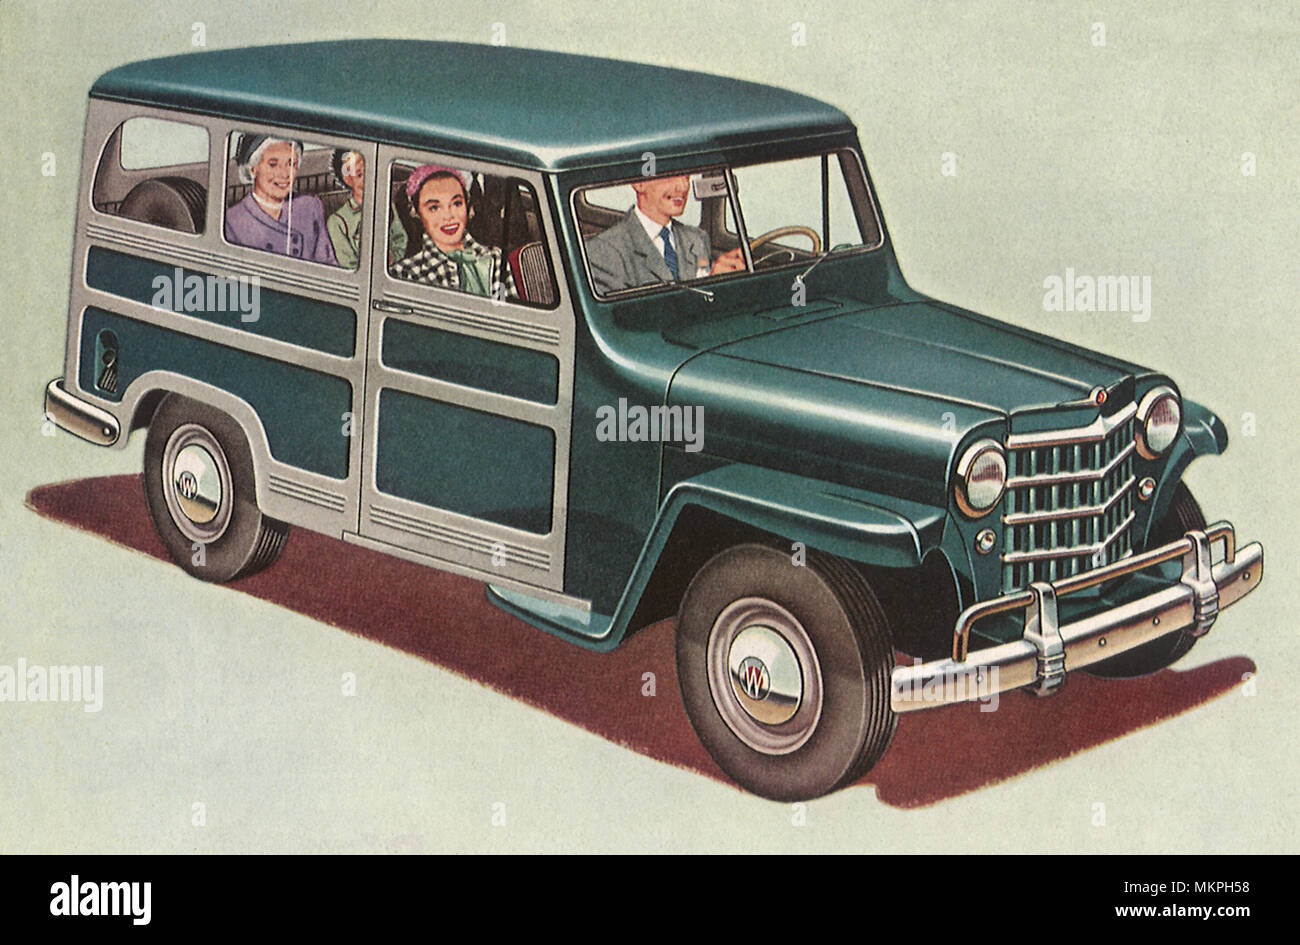 1951 Willys-Overland Stockfoto